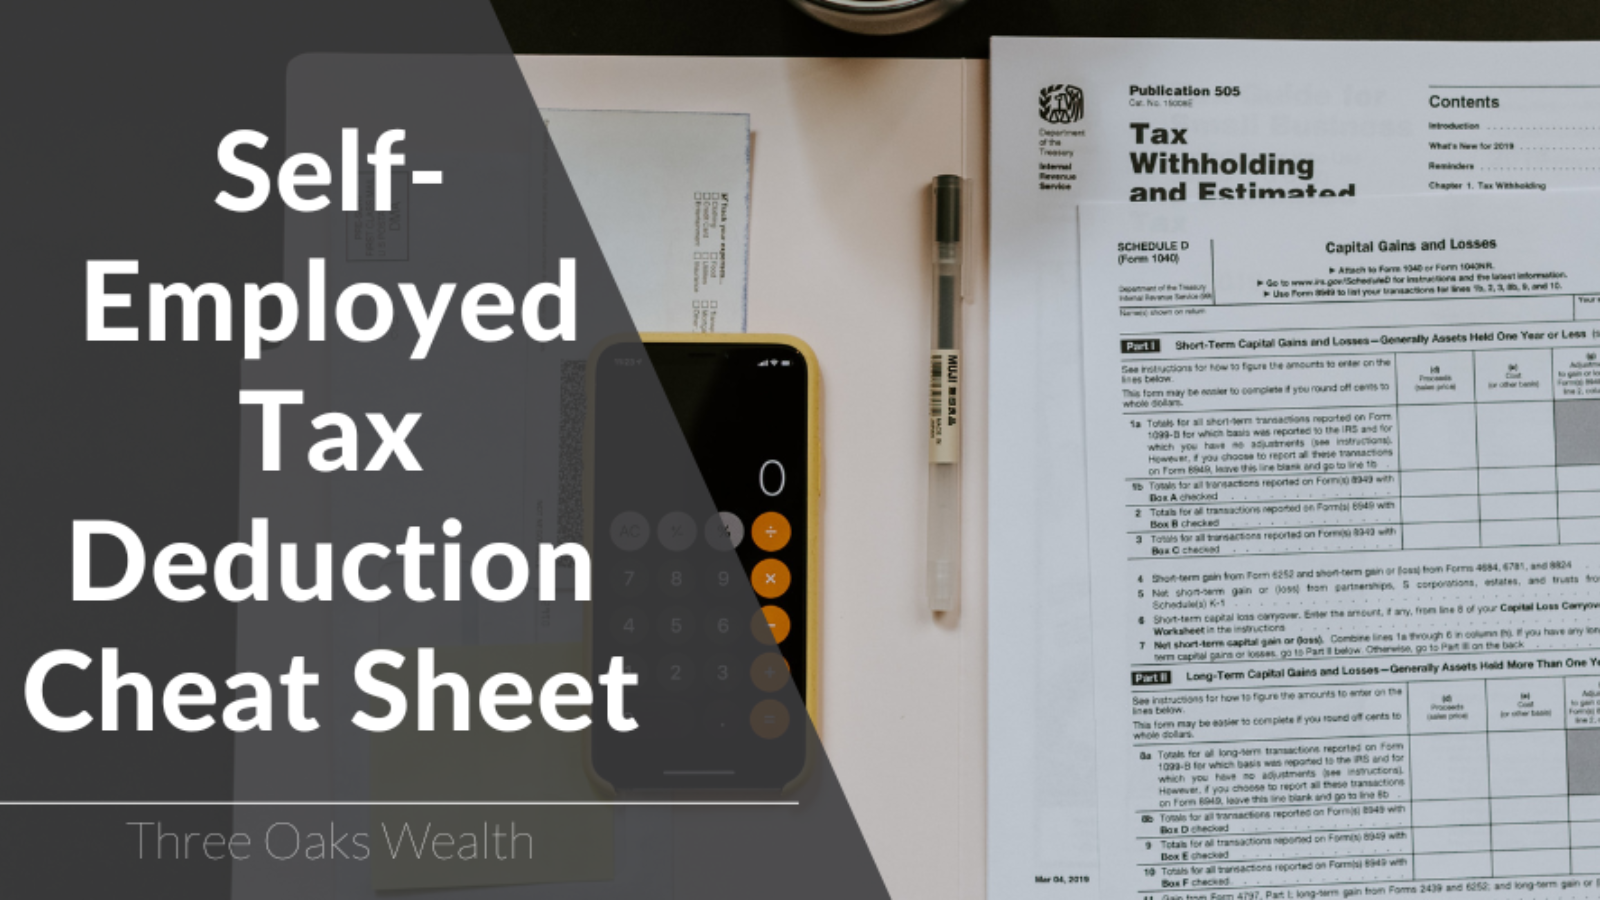 Self-Employed Tax Deduction Cheat Sheet main image